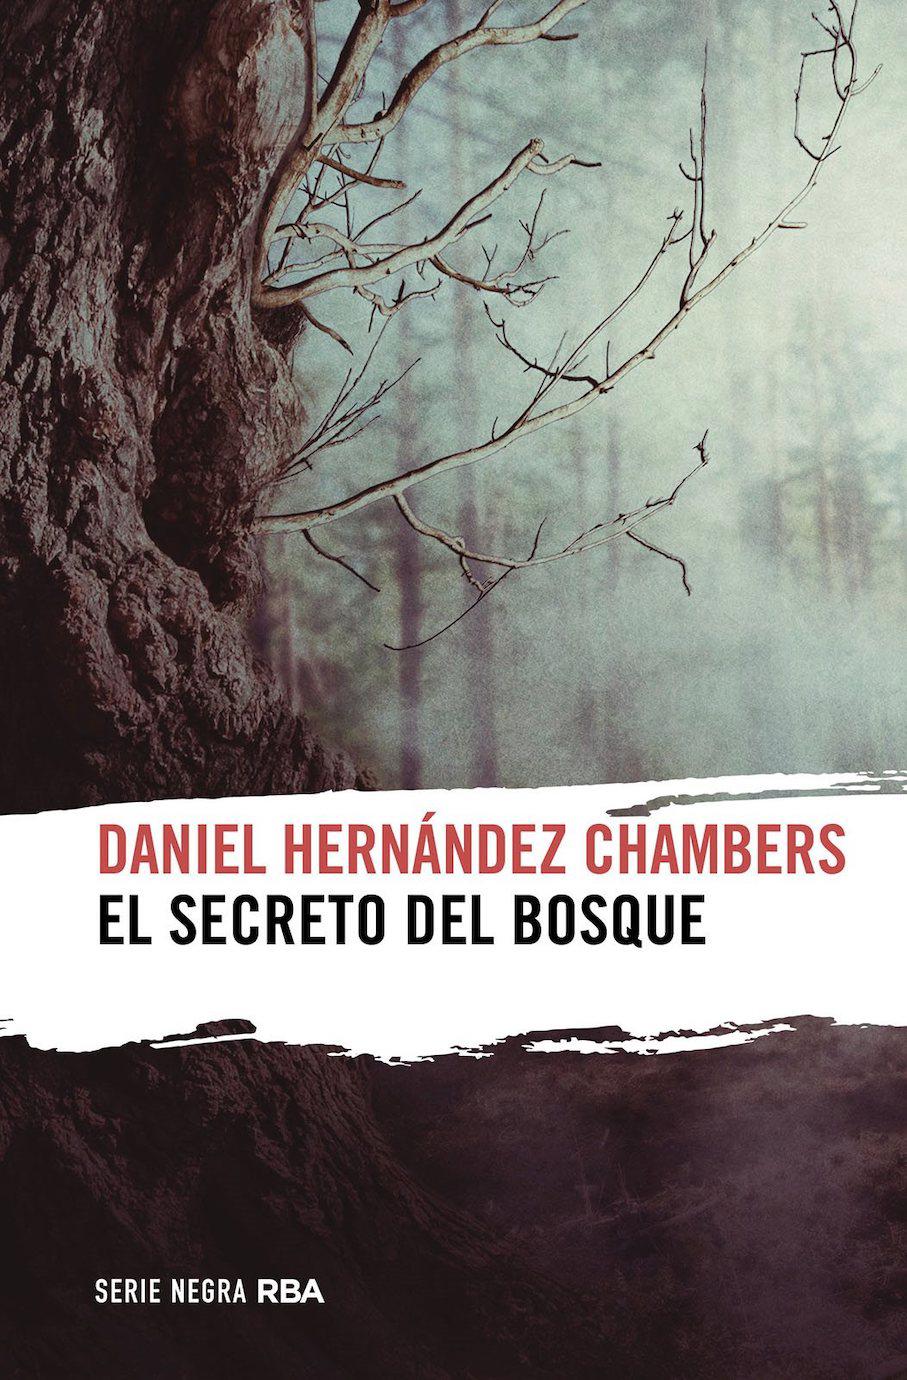 El secreto del bosque, de Daniel Hernández Chambers